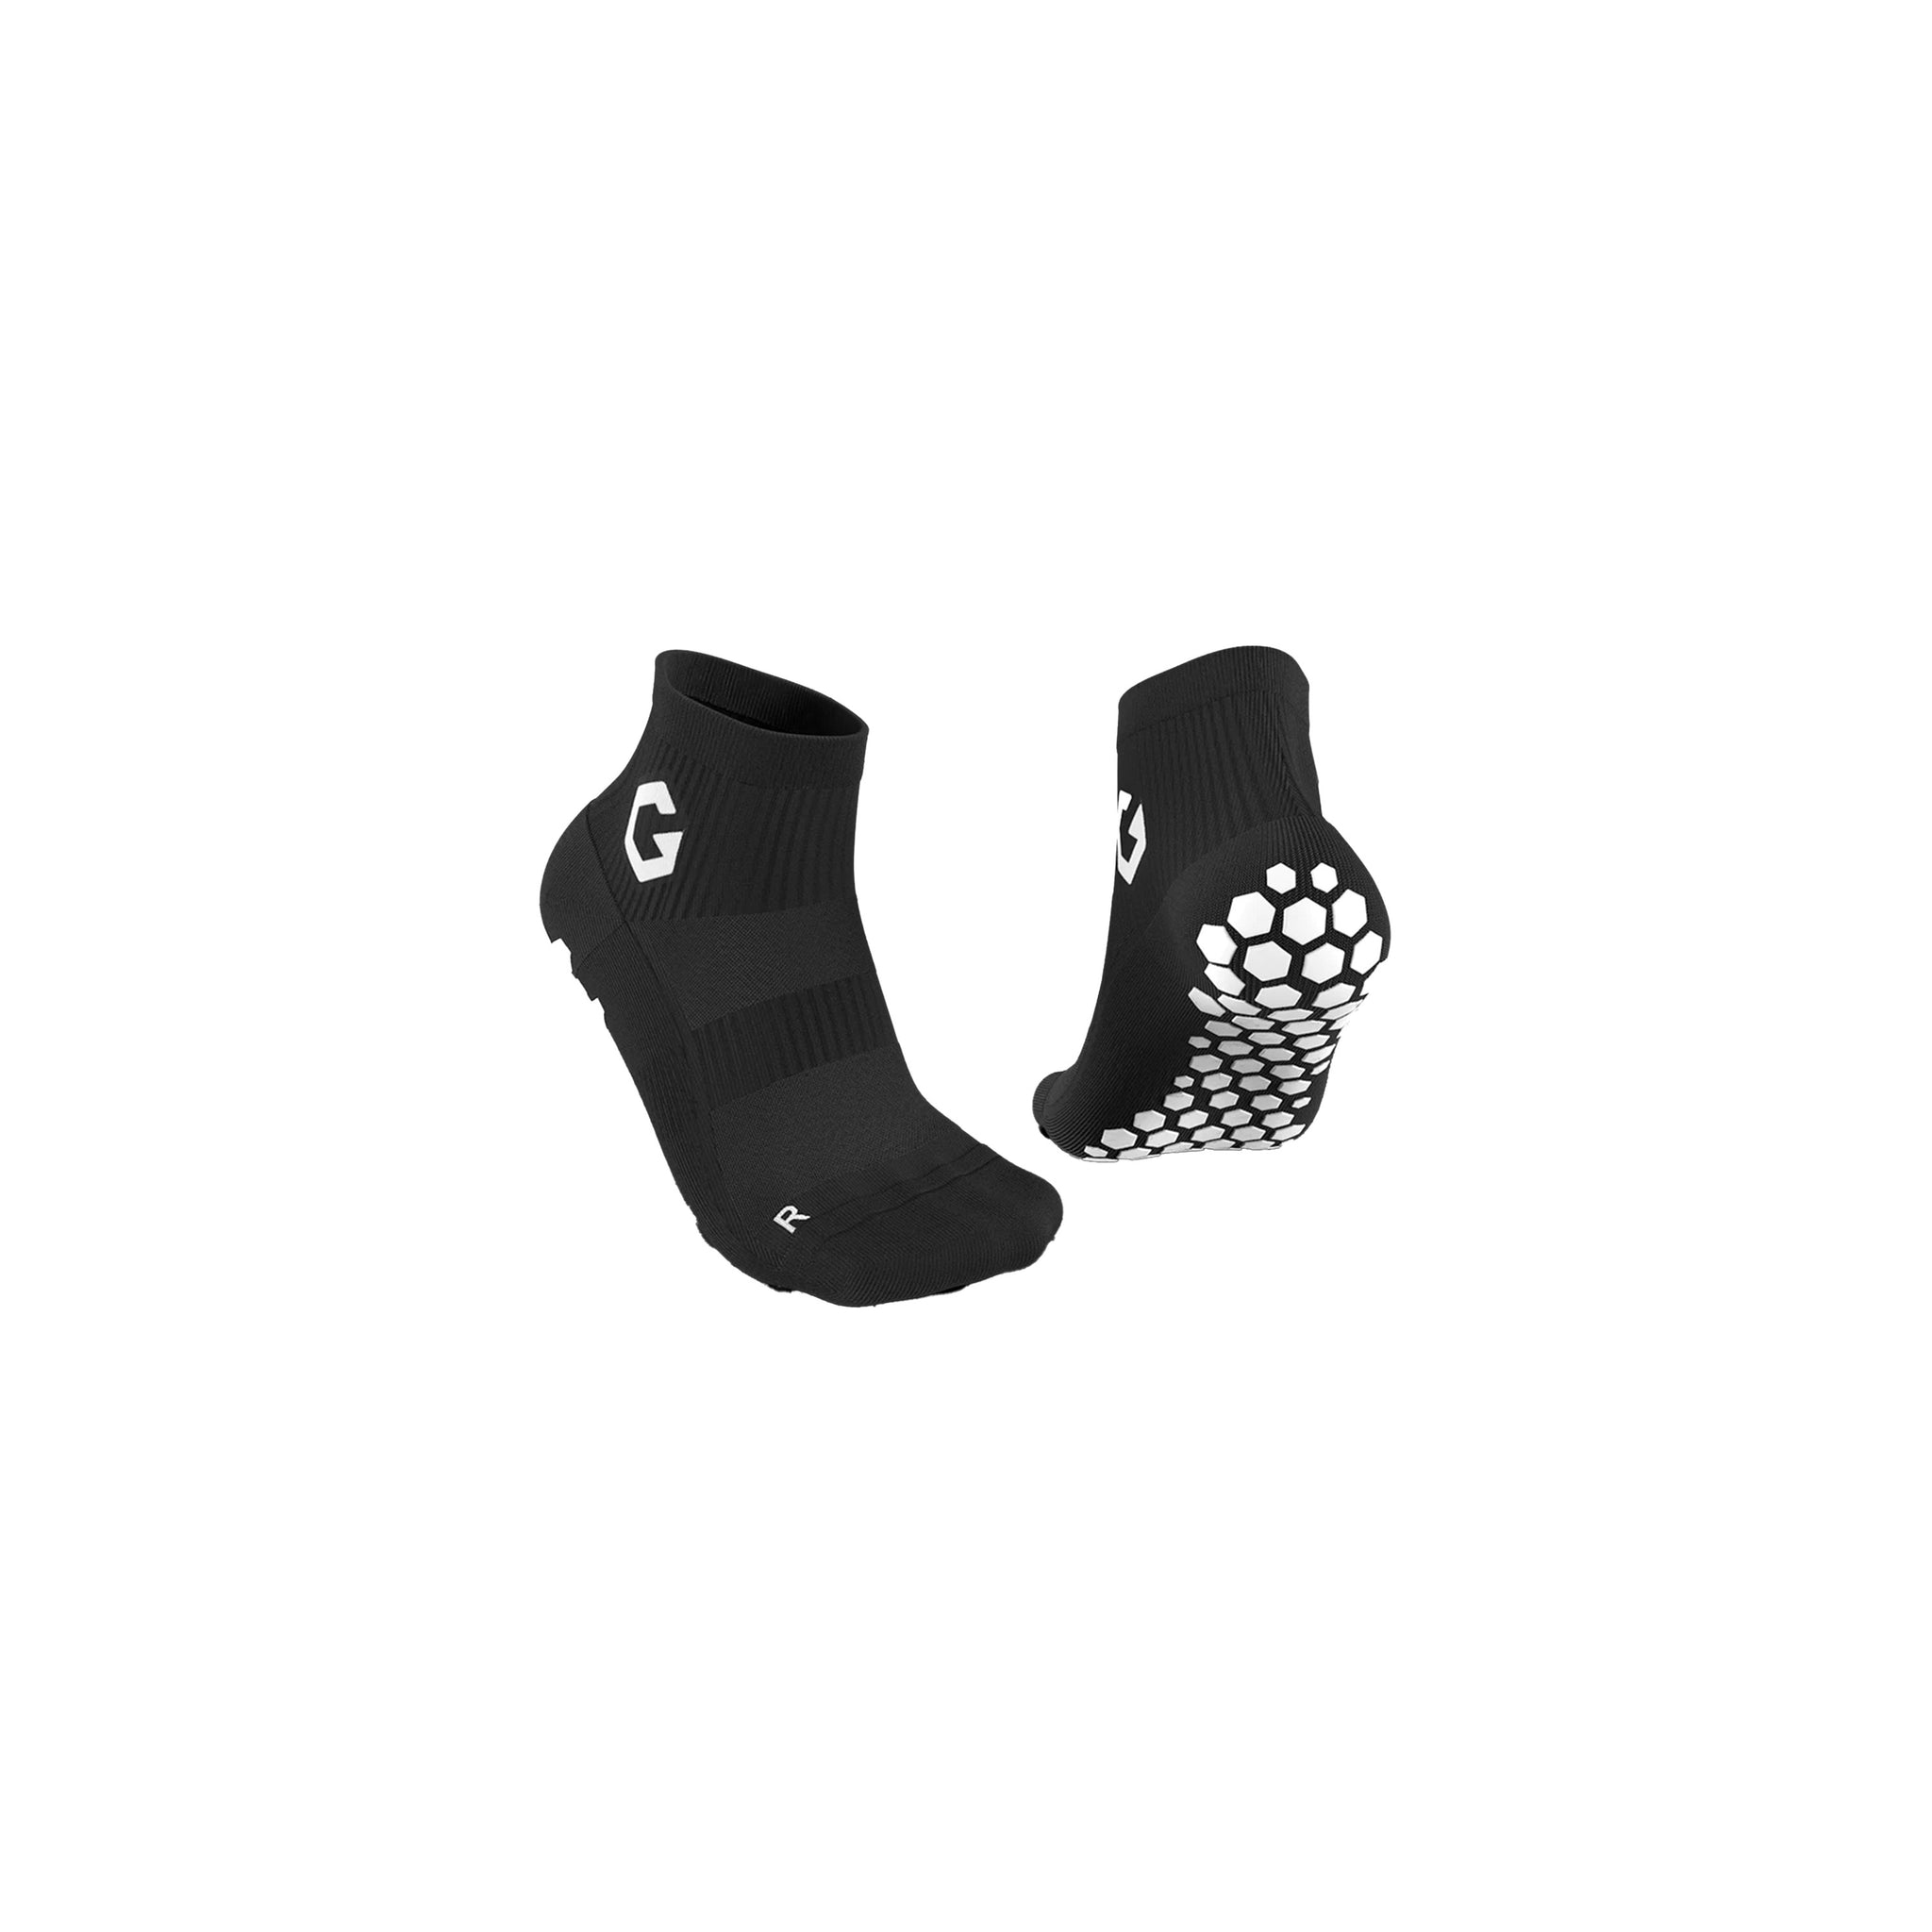 SENDA Gravity Pro Grip Socks Ankle Length (Black)